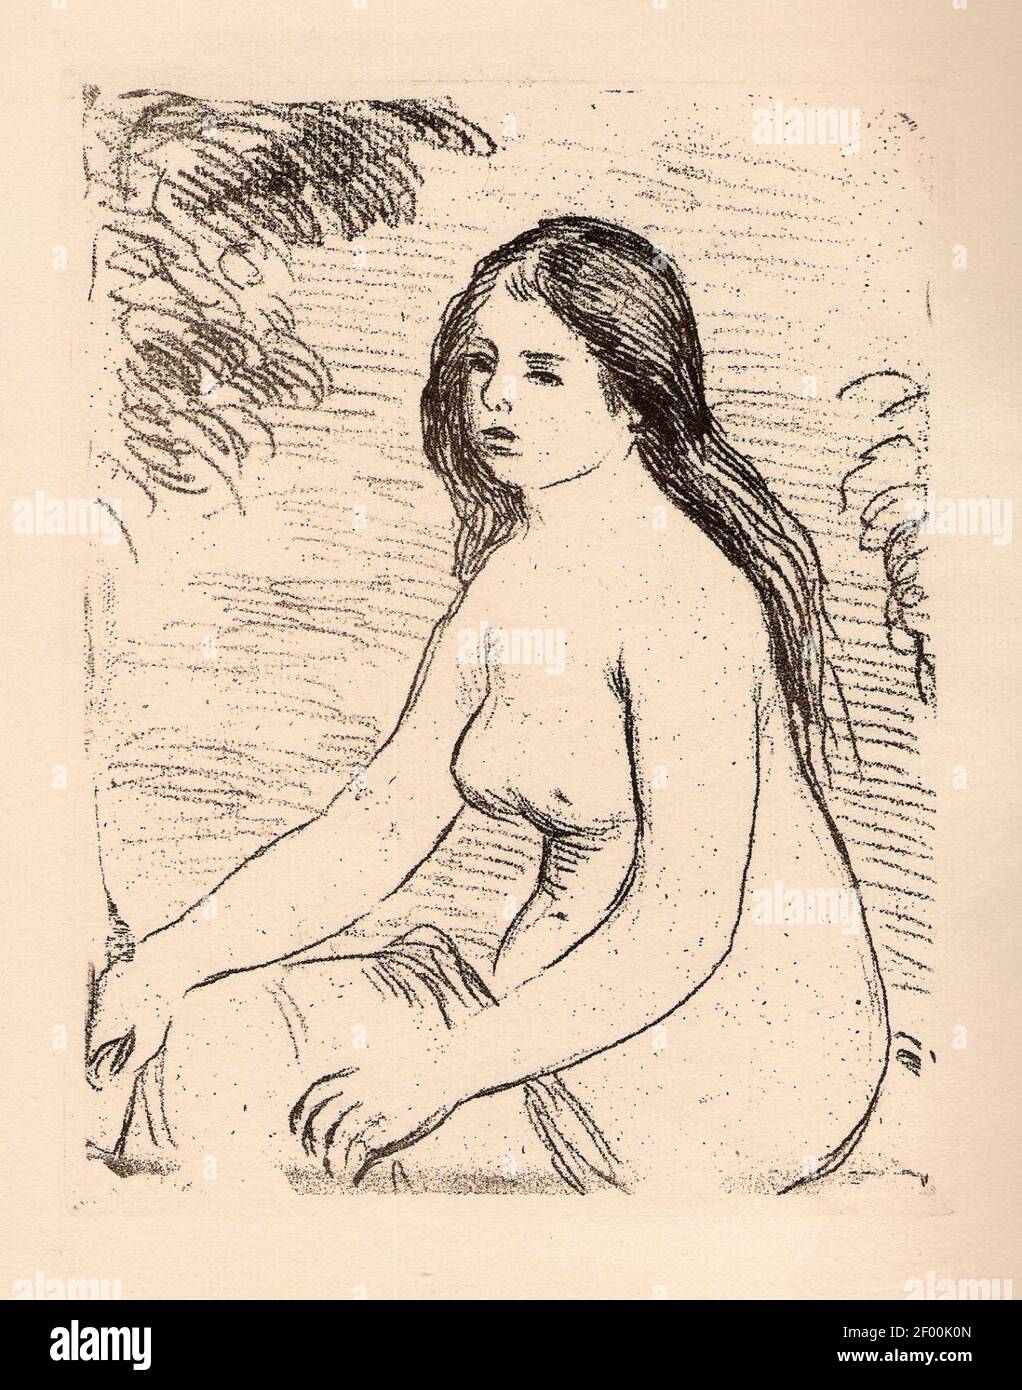 Pierre-Auguste Renoir - Femme nue assise - Litho. Stock Photo